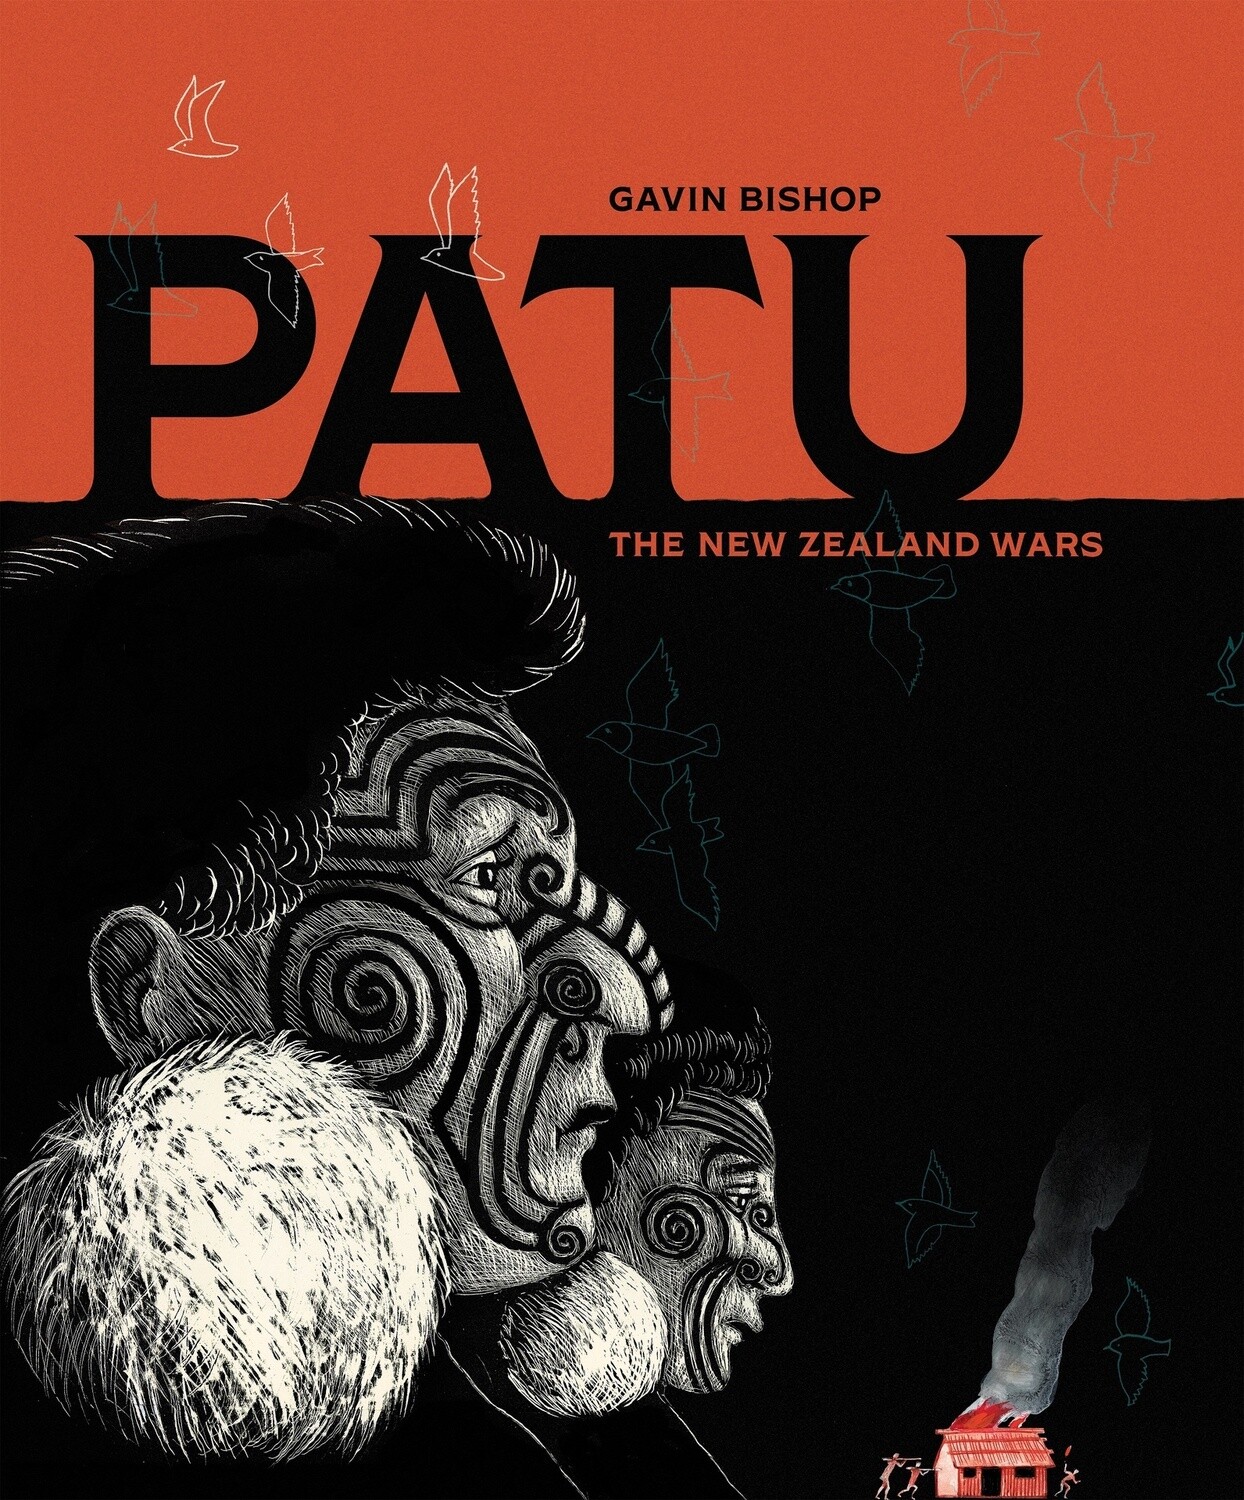 Patu: The New Zealand Wars by Gavin Bishop